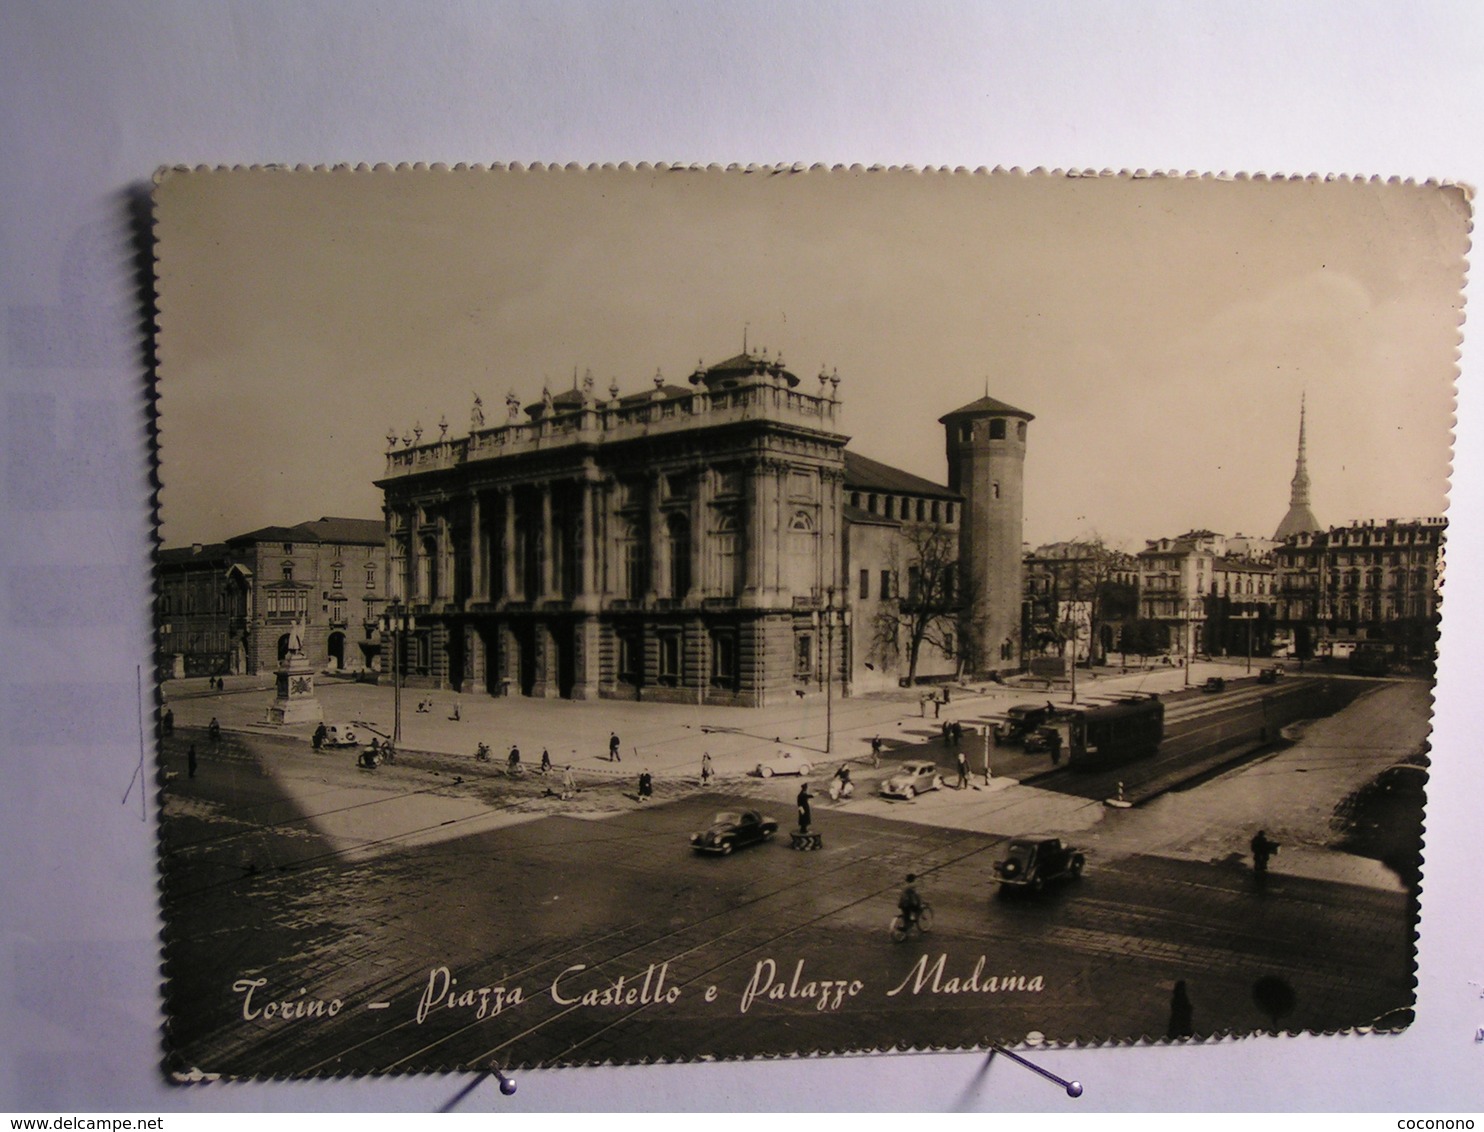 Torino - Piazza Castello - Palazzo Madama - Palazzo Madama